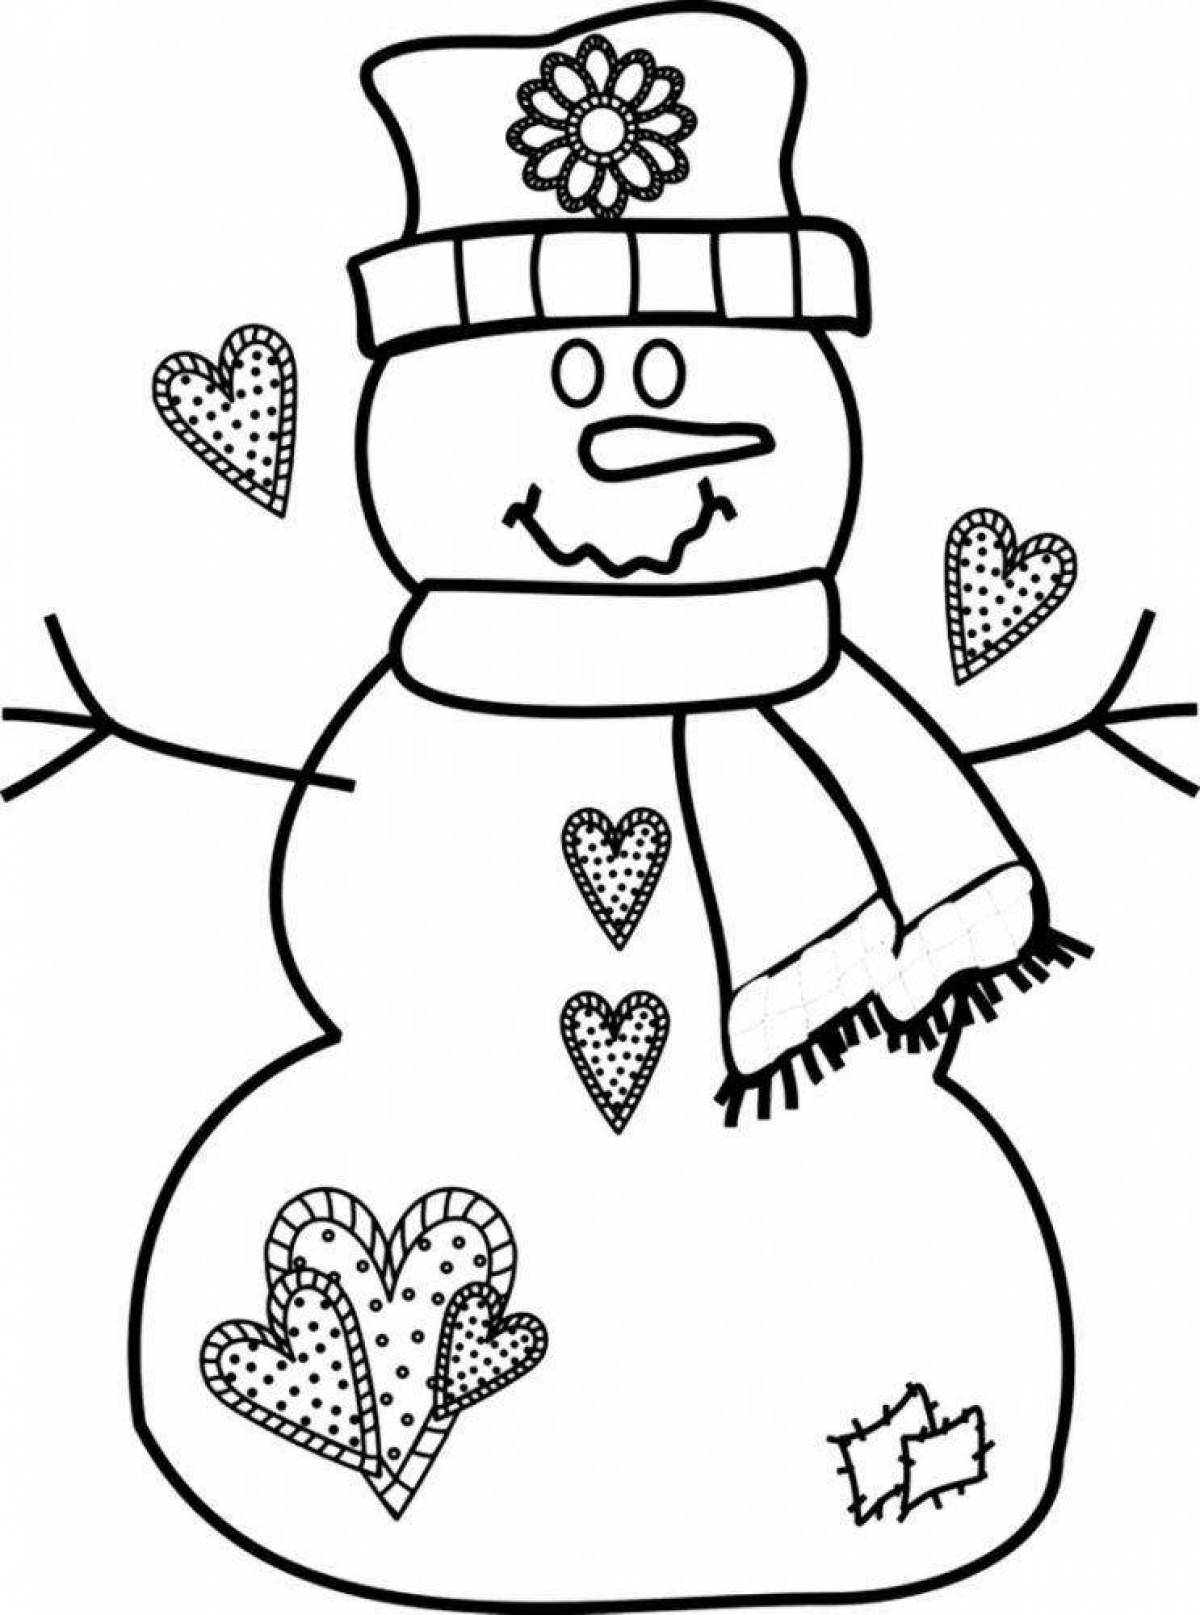 Exquisite snowman coloring pages